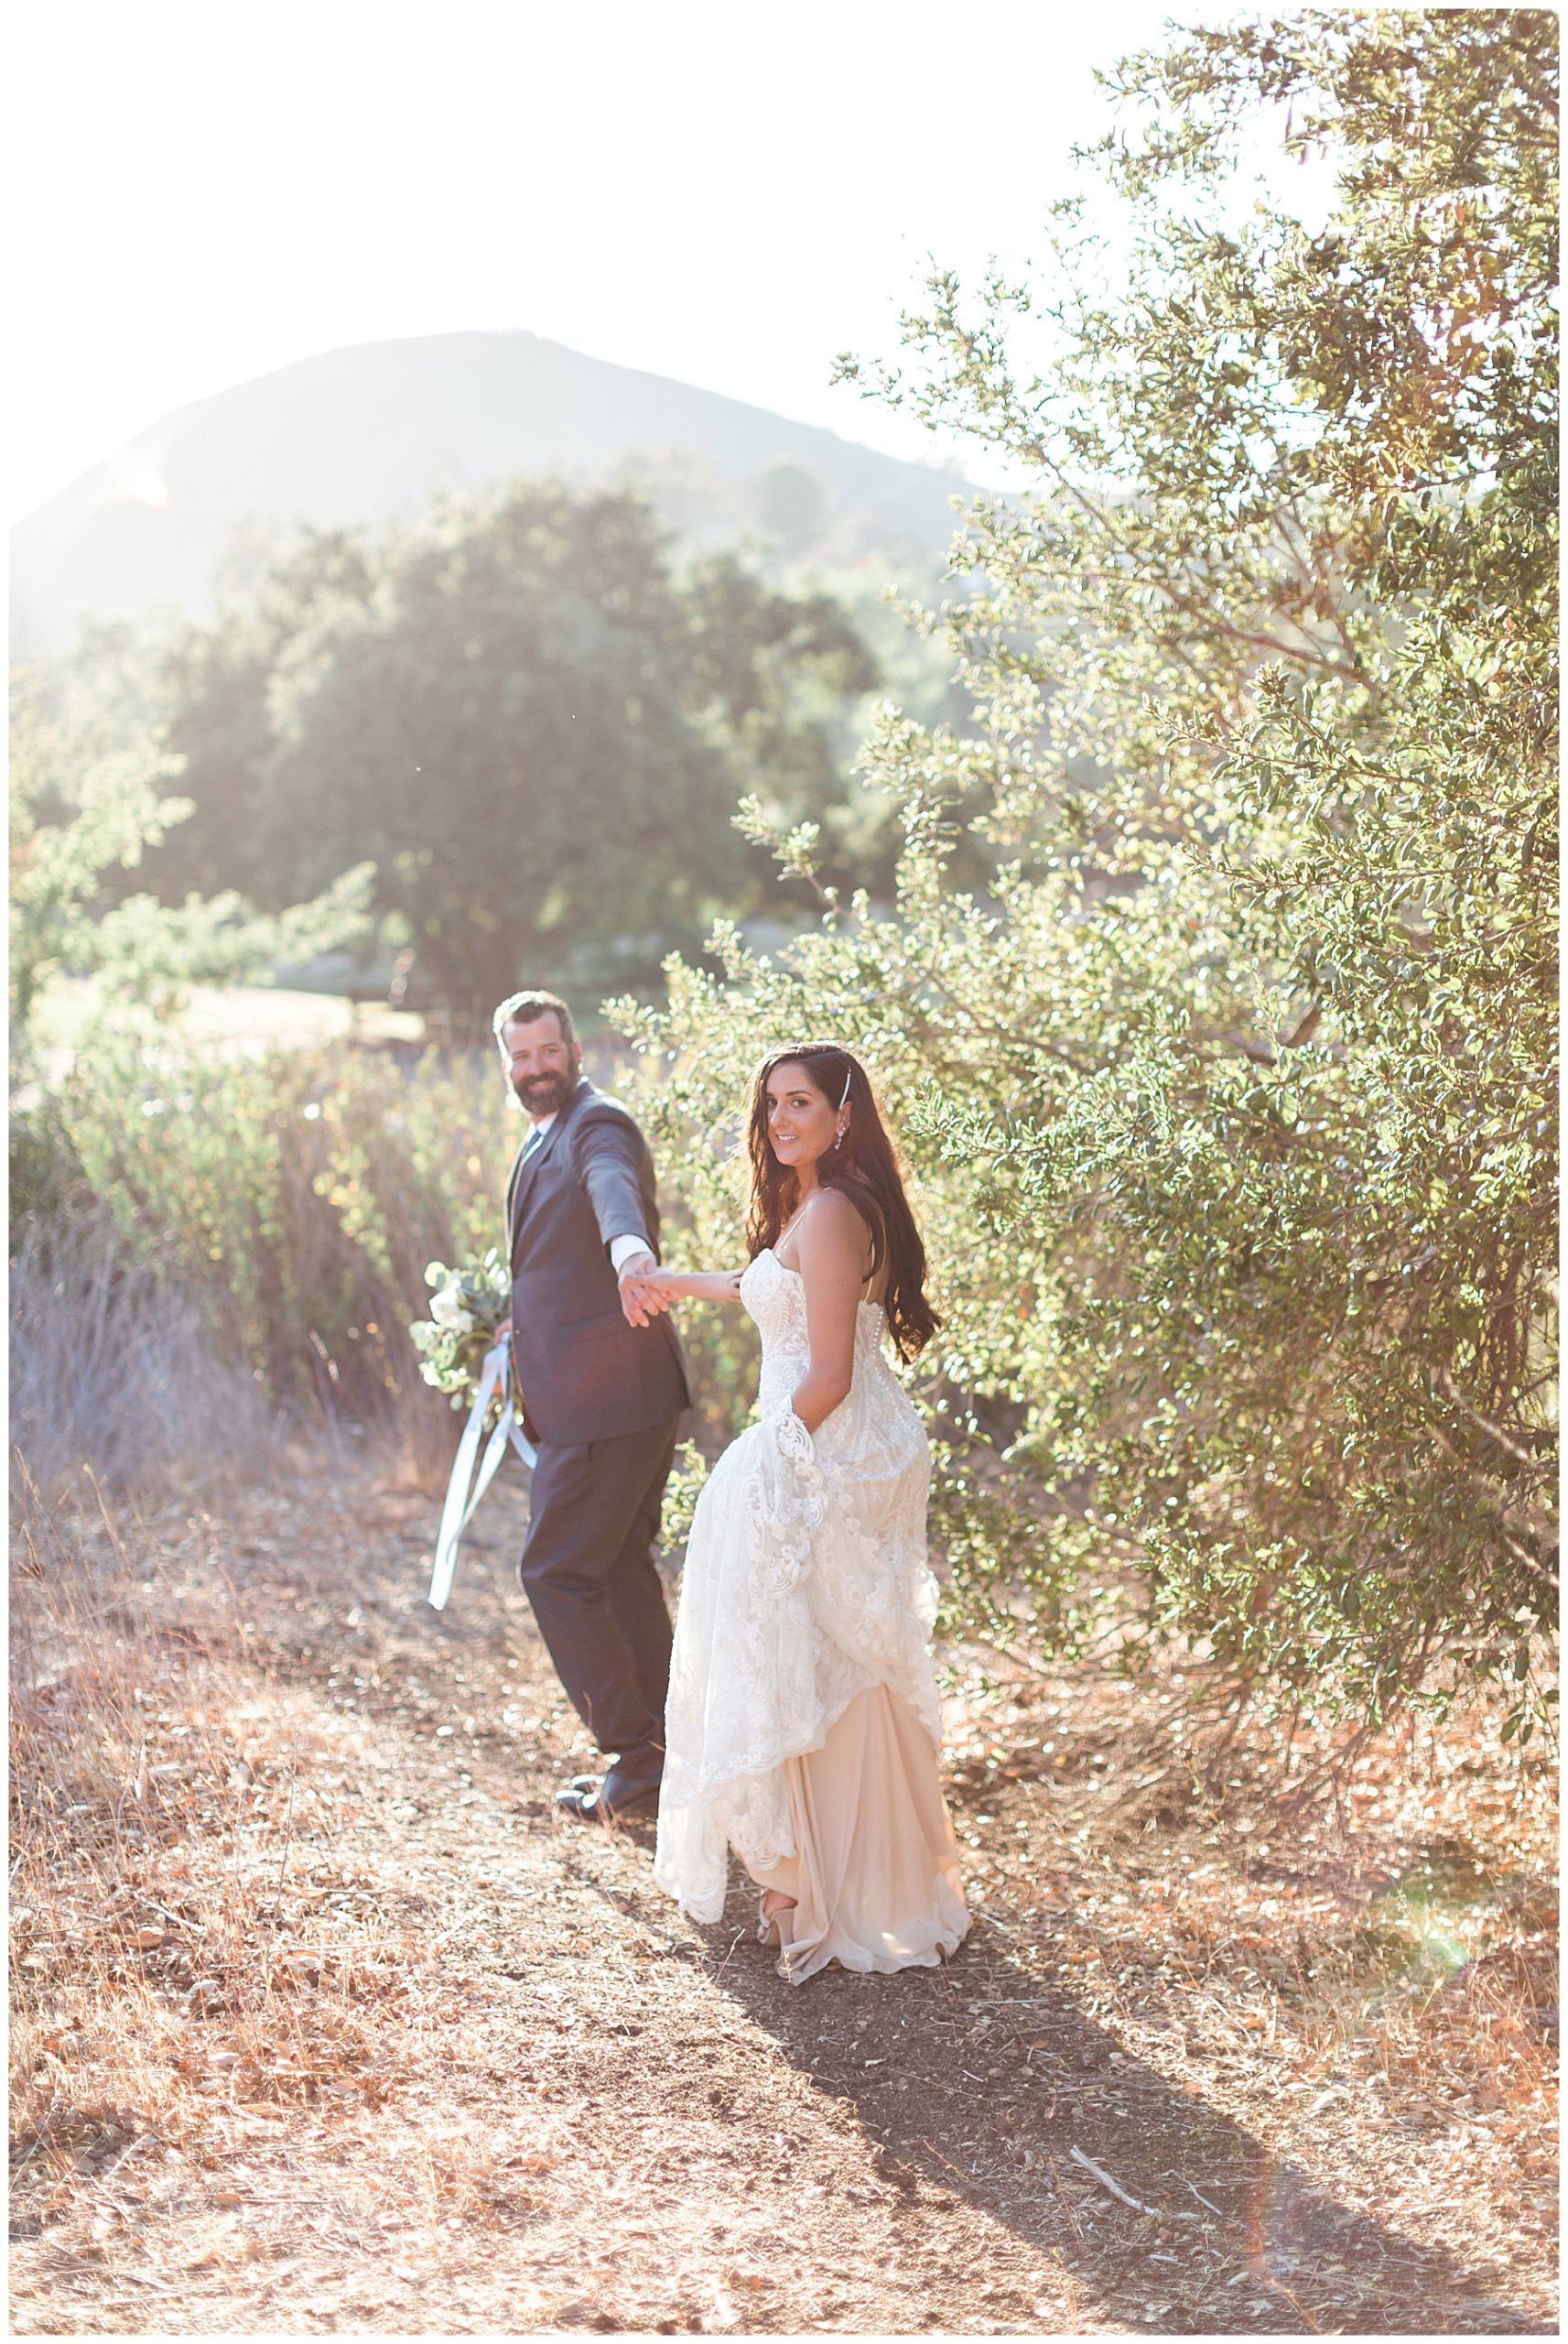 Kristen & Chris’s Wedding | Katie Jane Photography | Colorado Wedding Photographer | via thekatiejanephoto.com